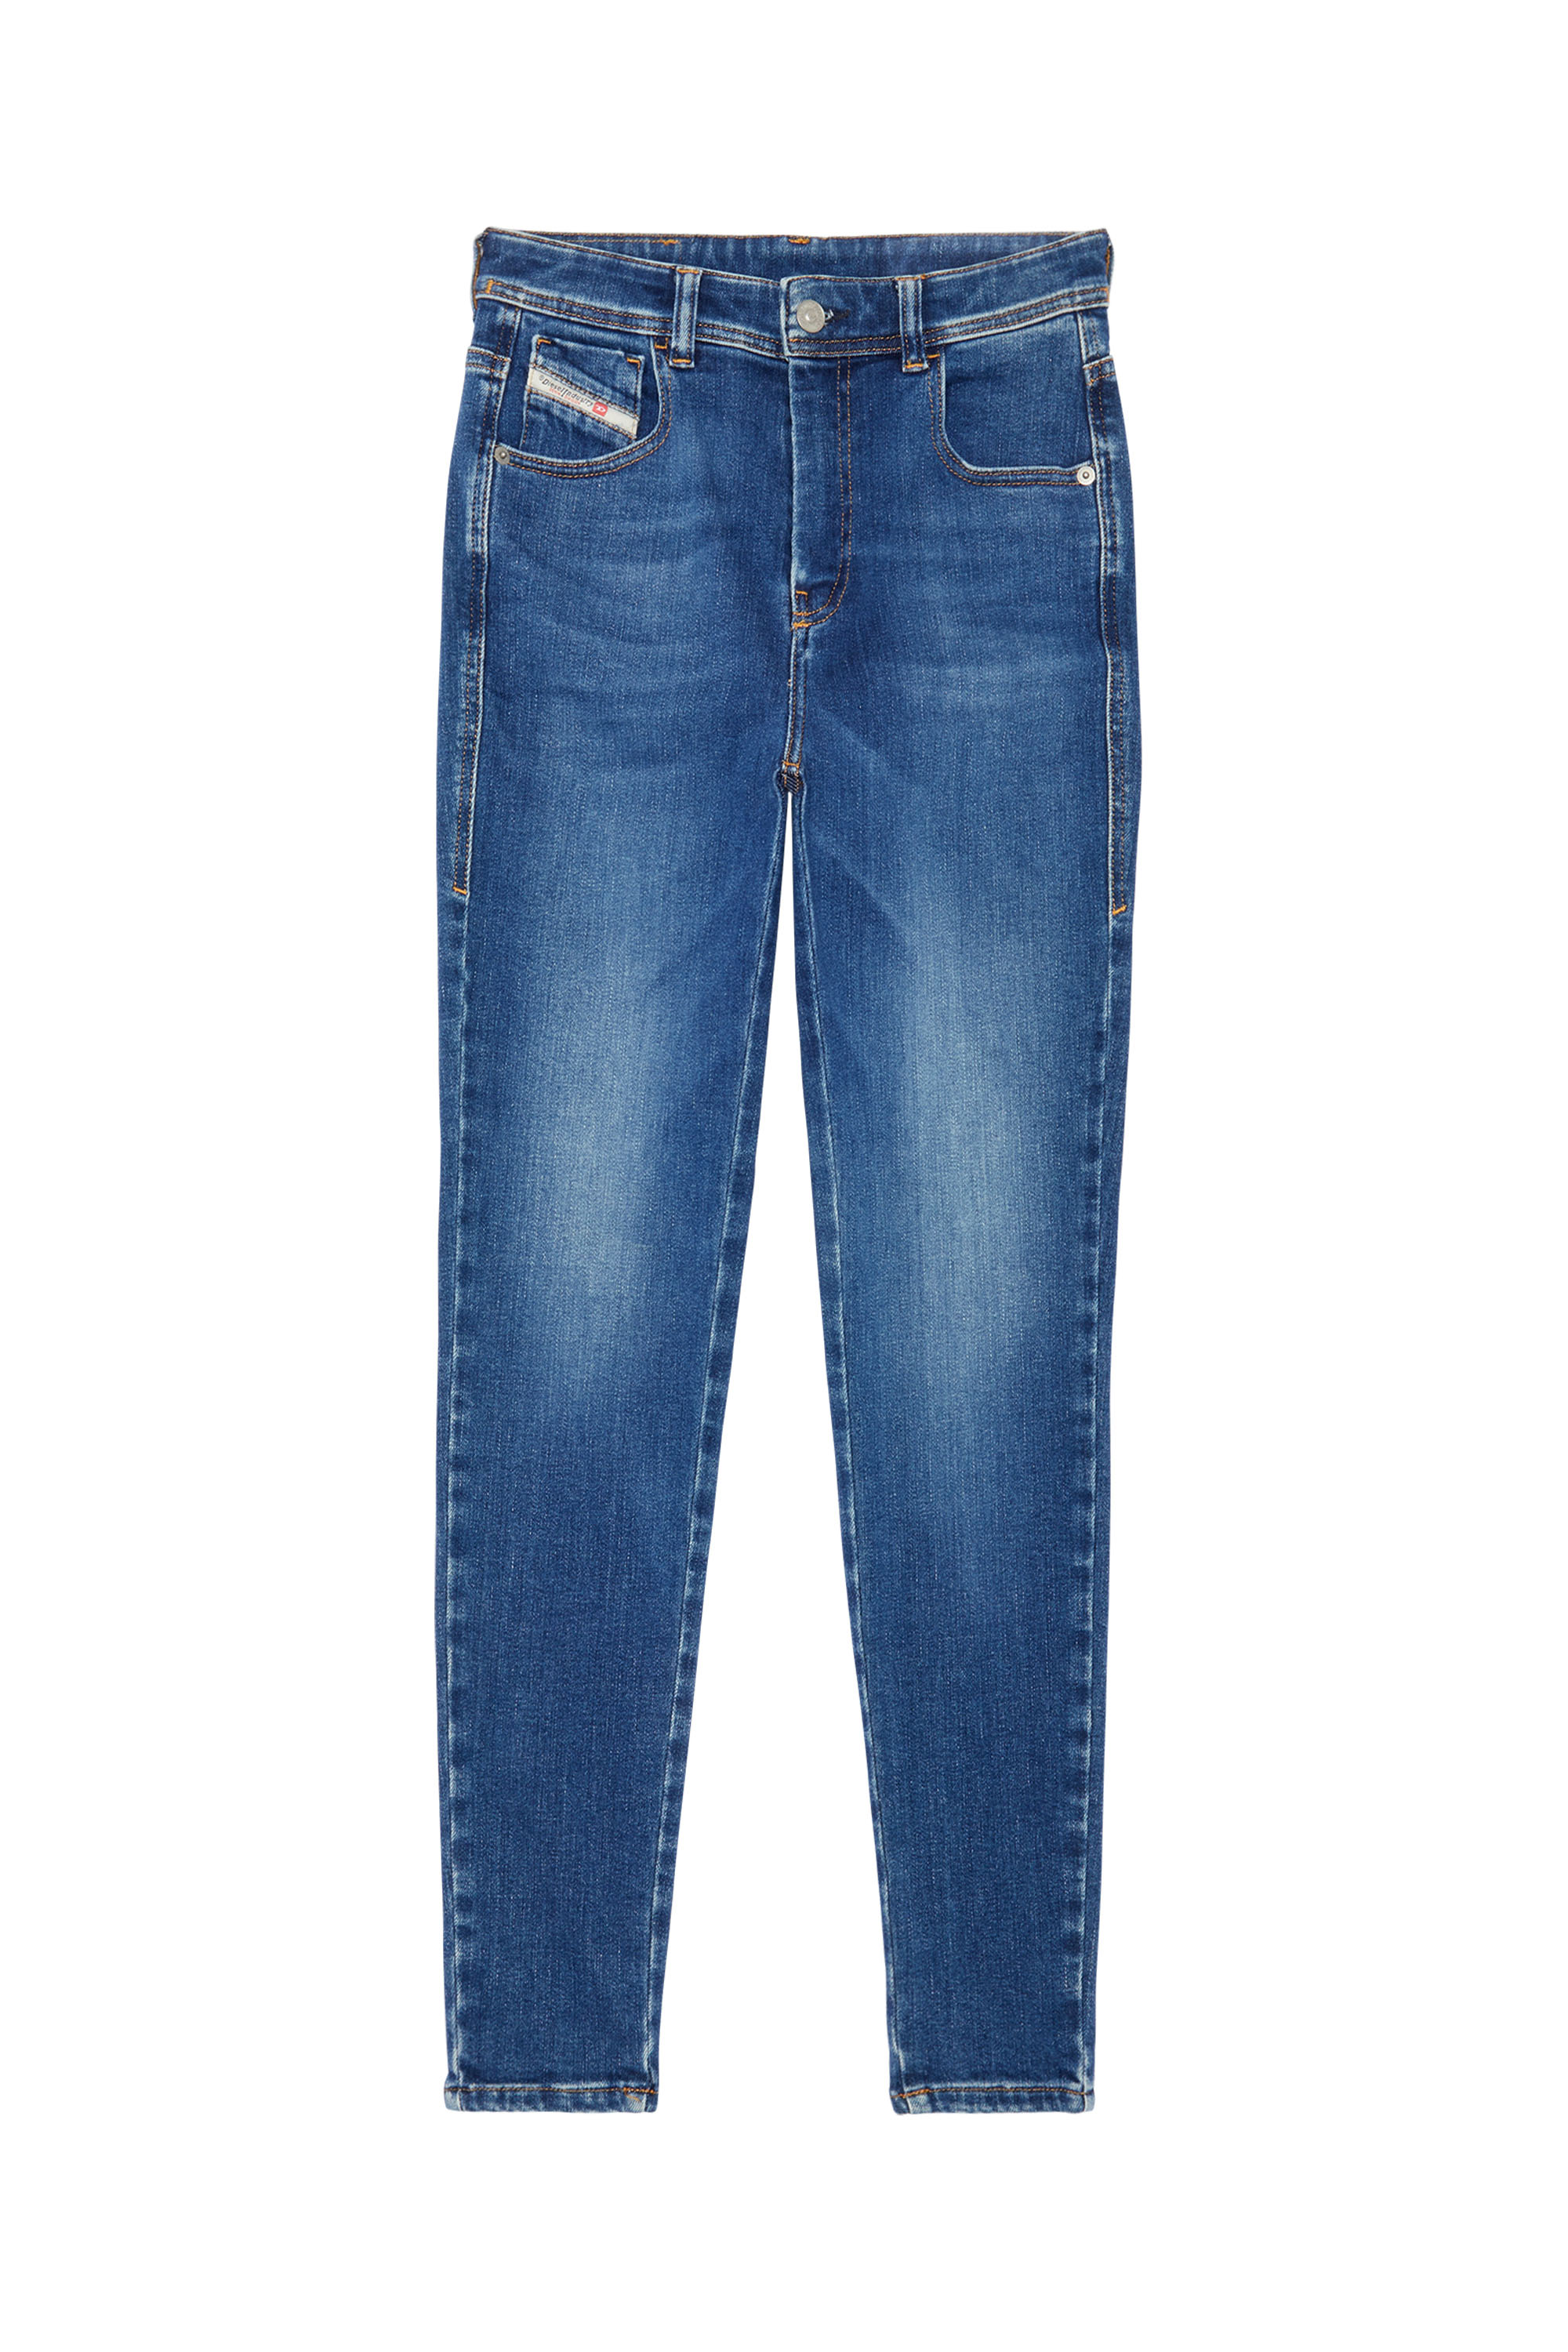 1984 SLANDY-HIGH 09C21 Super skinny Jeans, Azul medio - Vaqueros